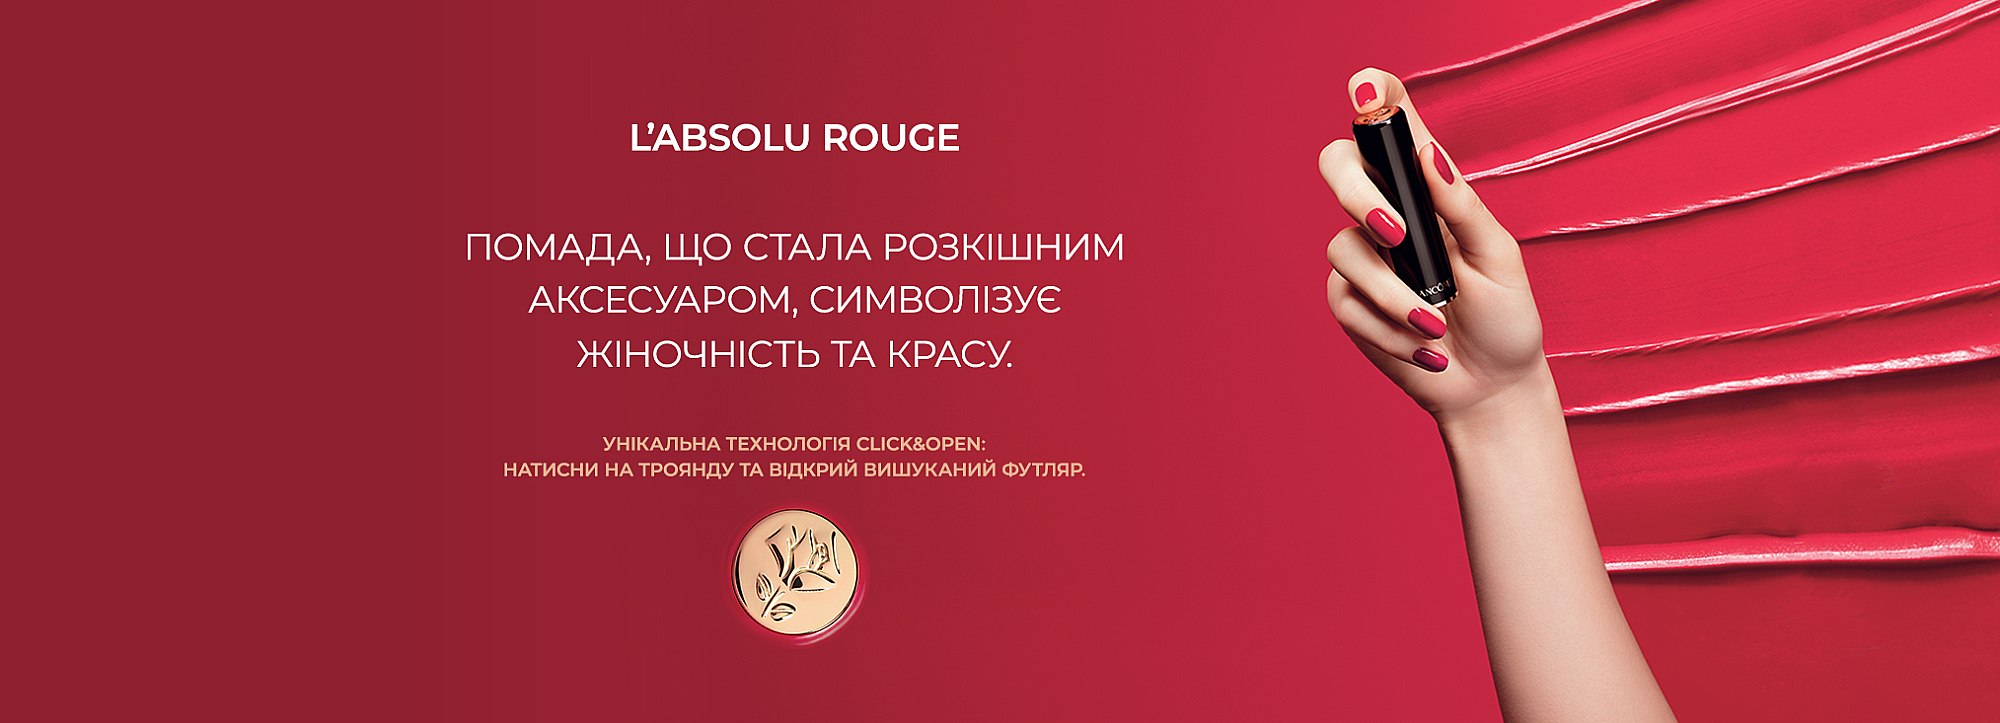 Lancome L'Absolu Rouge Cream